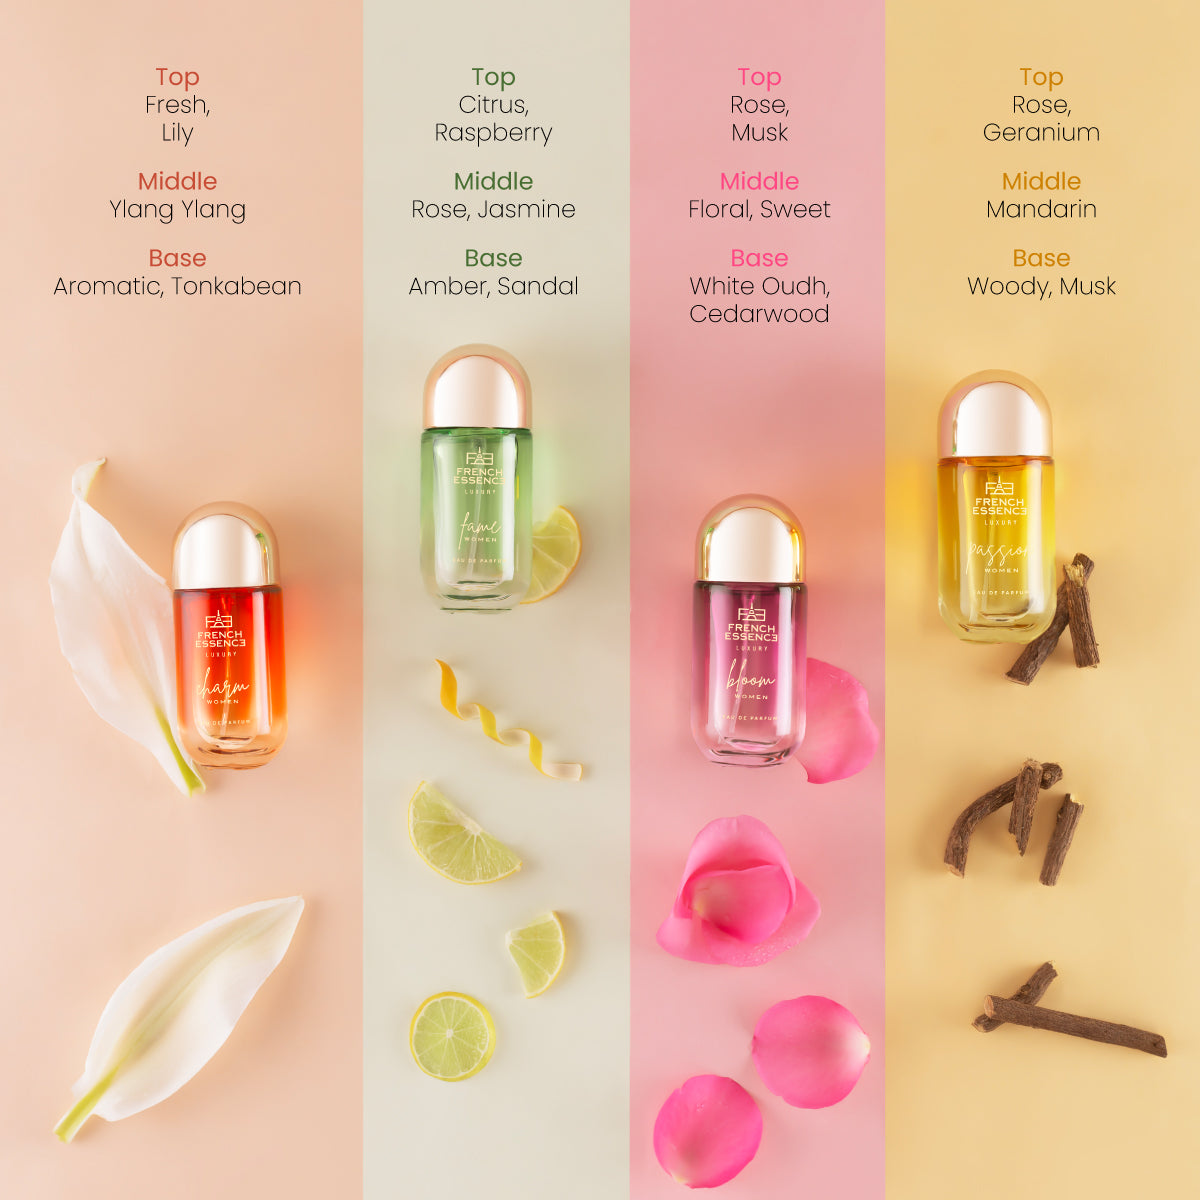 Women's Luxury Perfumes Gift Set - 4 x 25mls